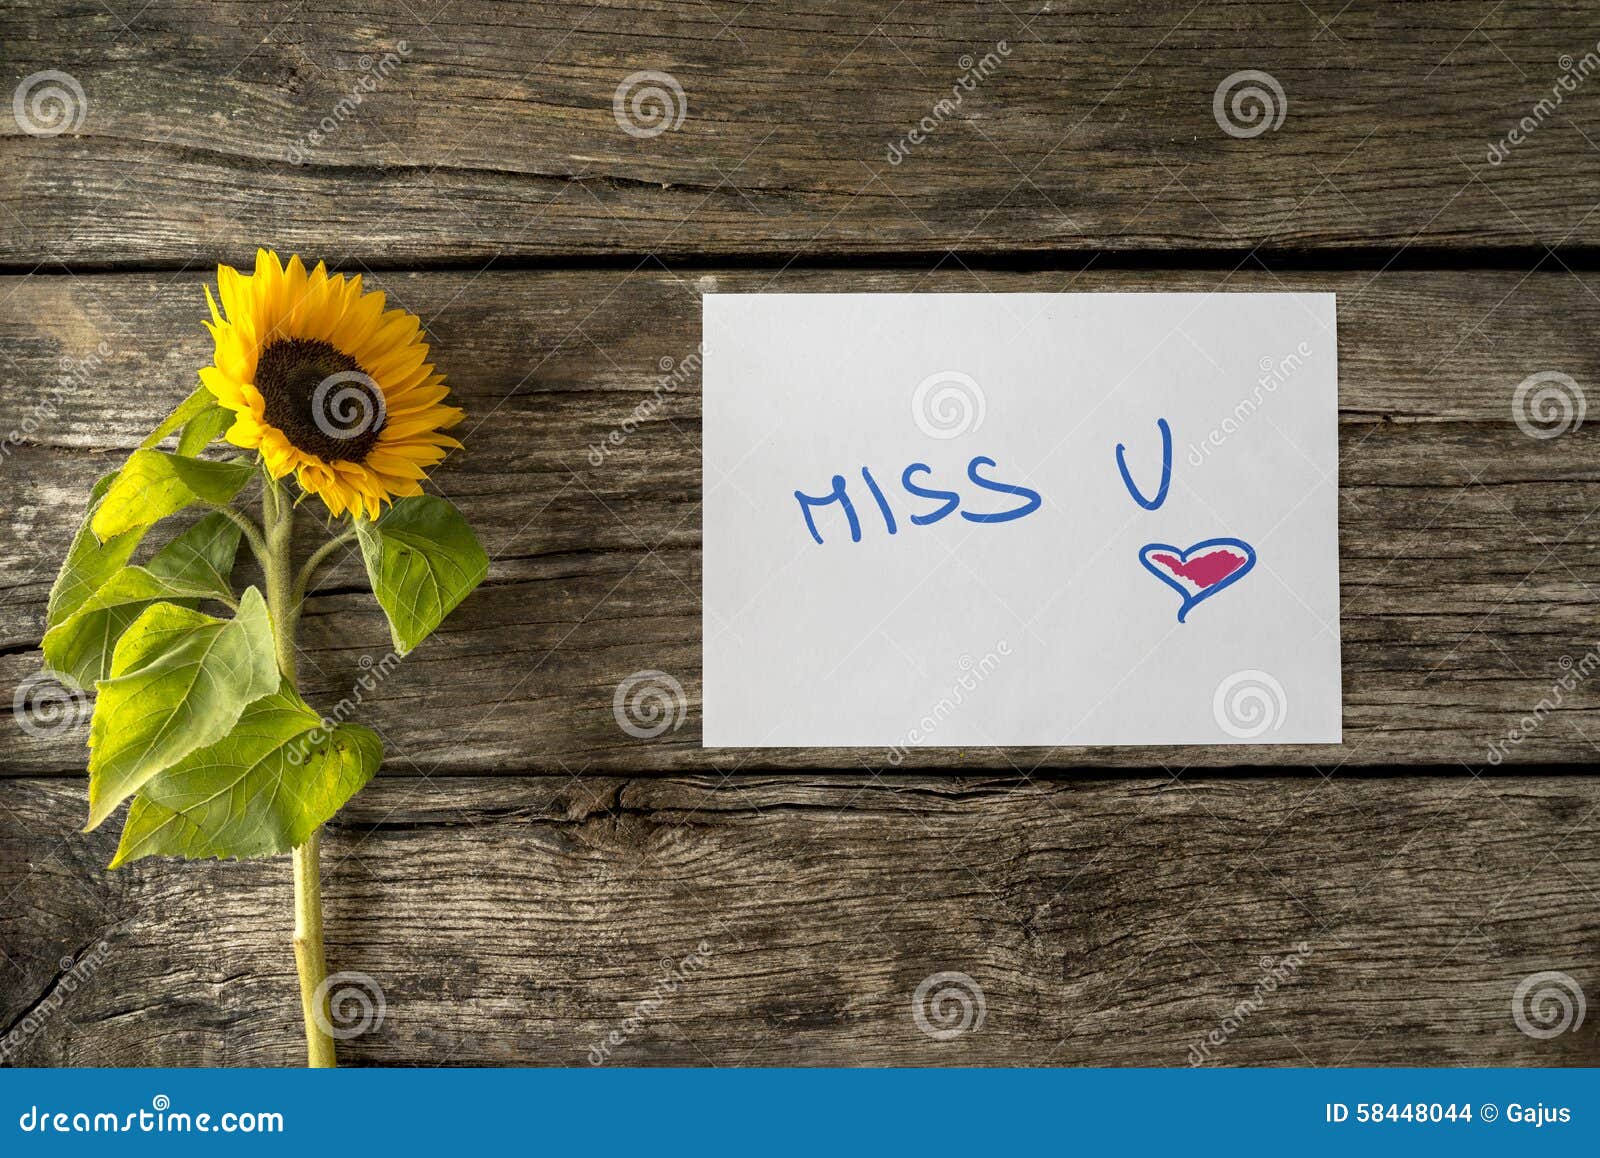 Romantic Miss U Message Next To a Beautiful Sunflower Stock Photo ...